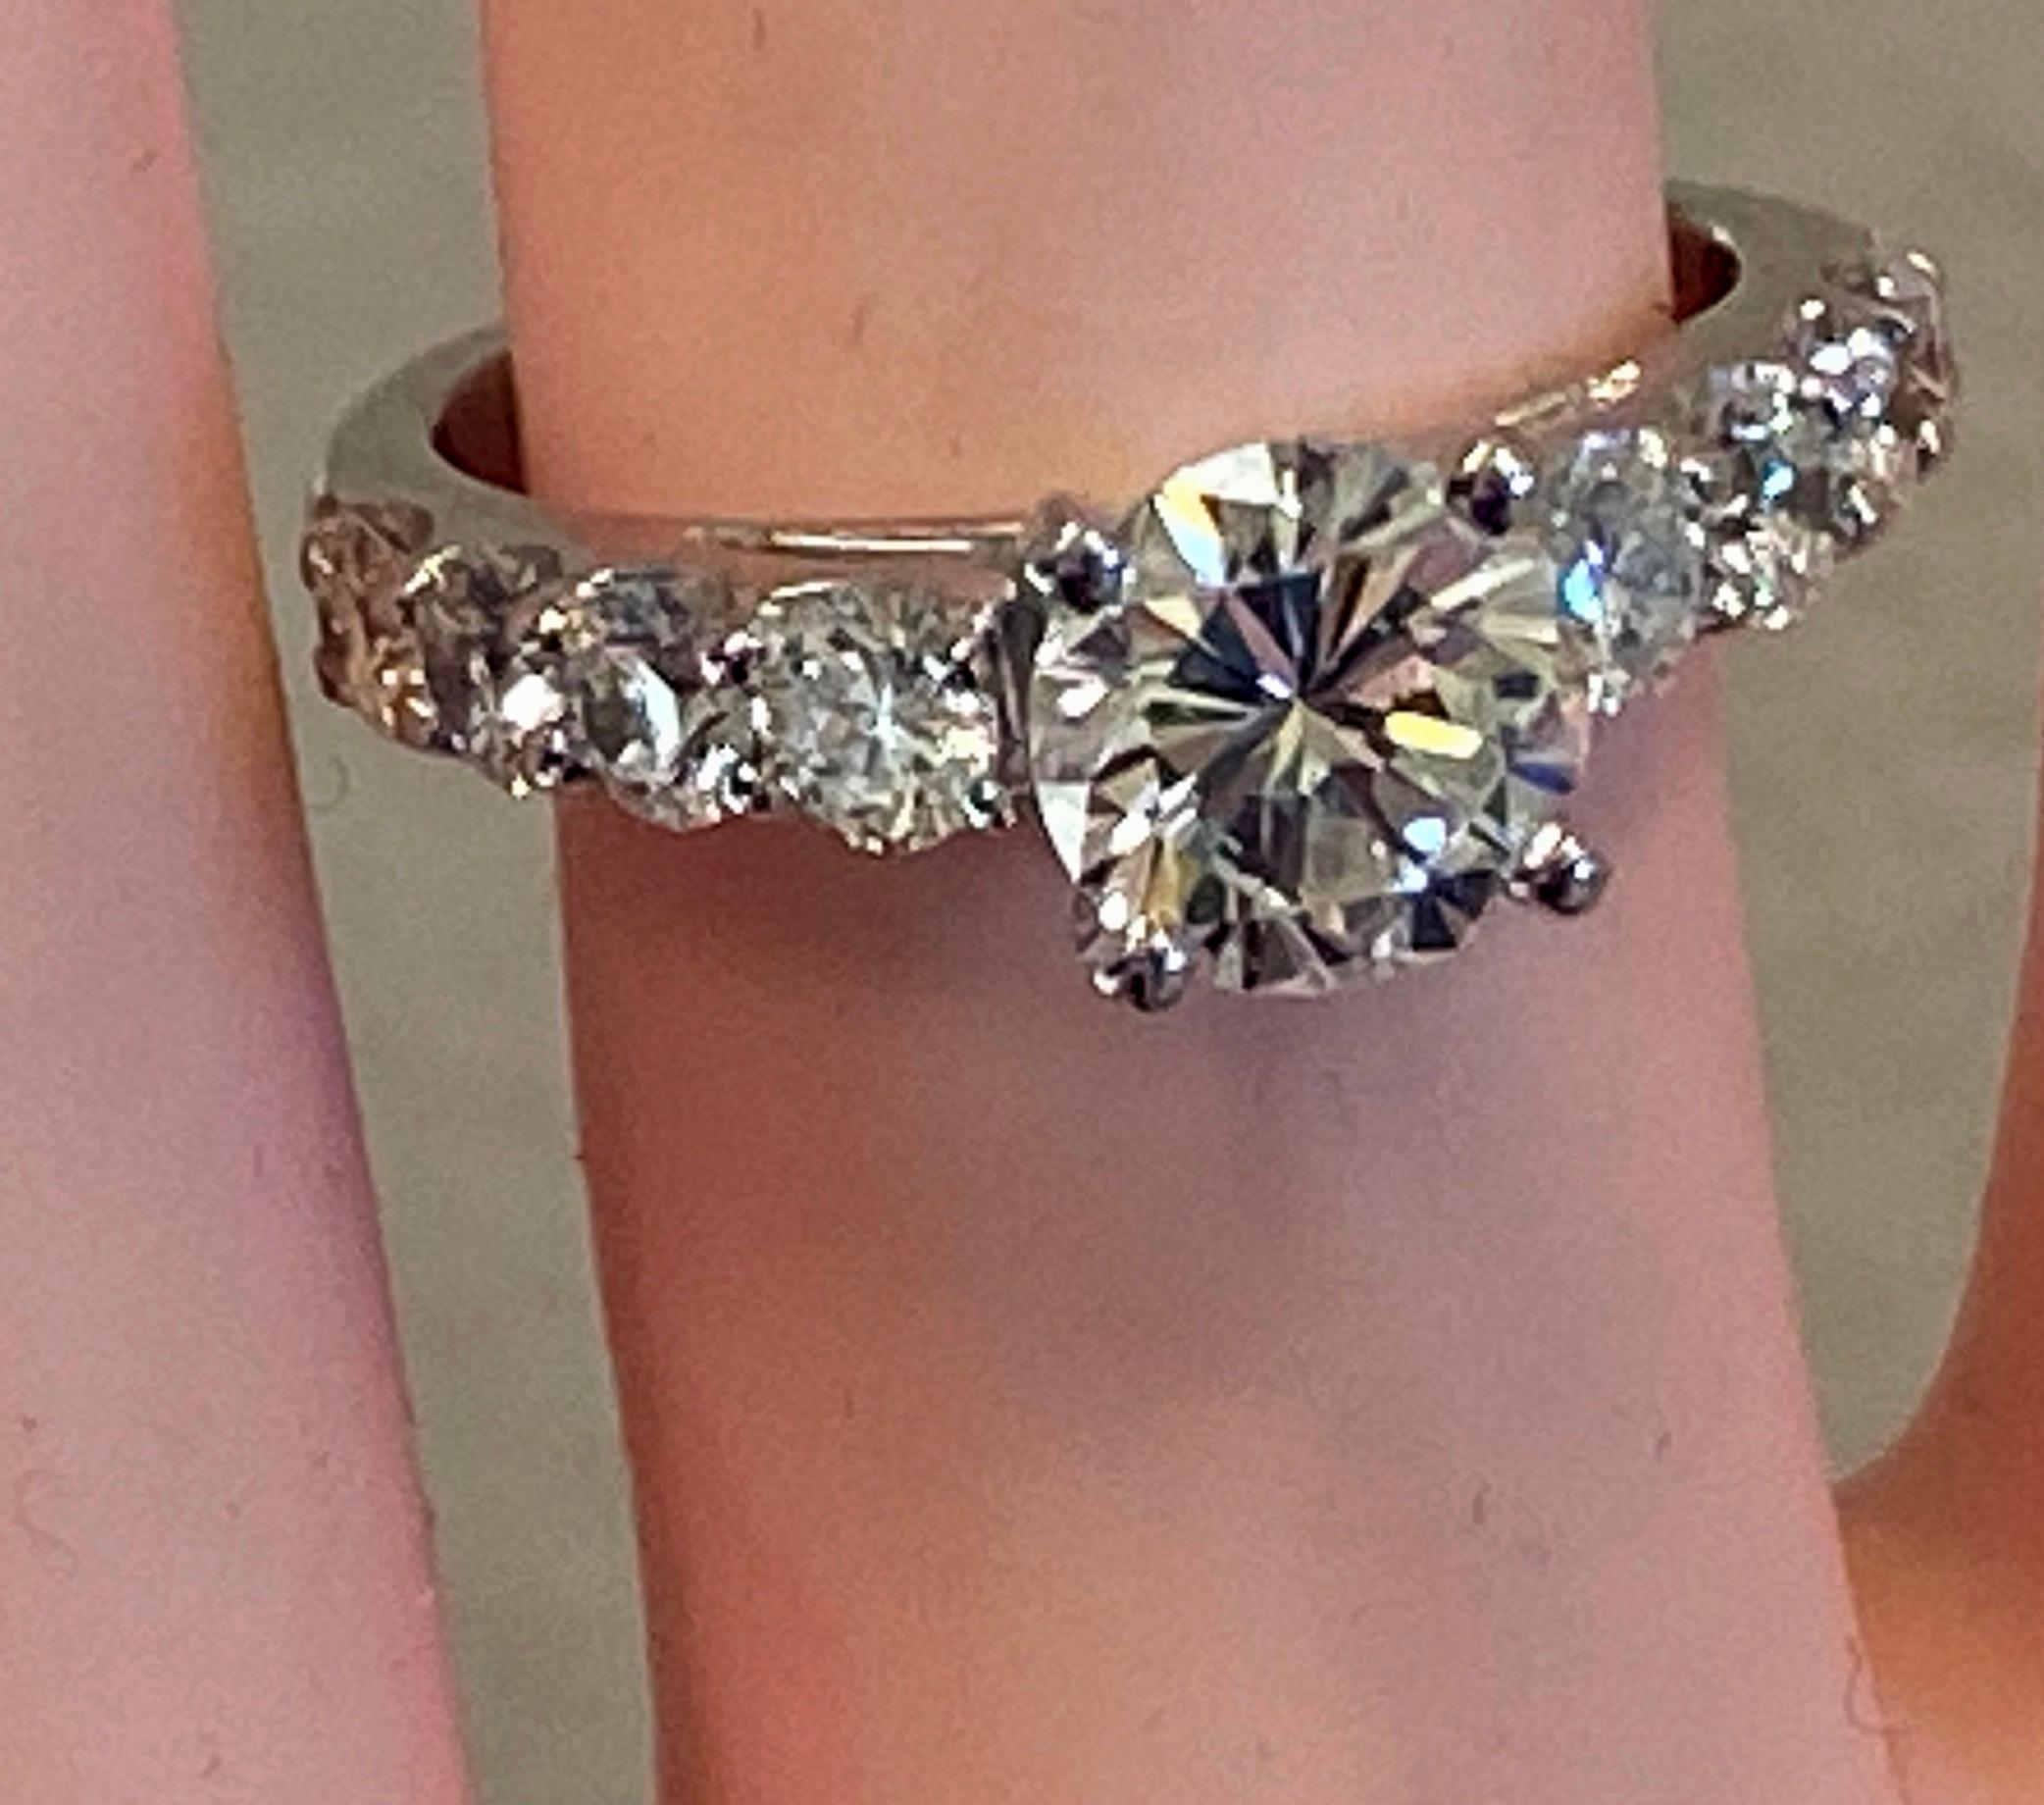 1.18 Carat Round Cut Center Diamond Engagement Ring in 14 Karat White Gold For Sale 2